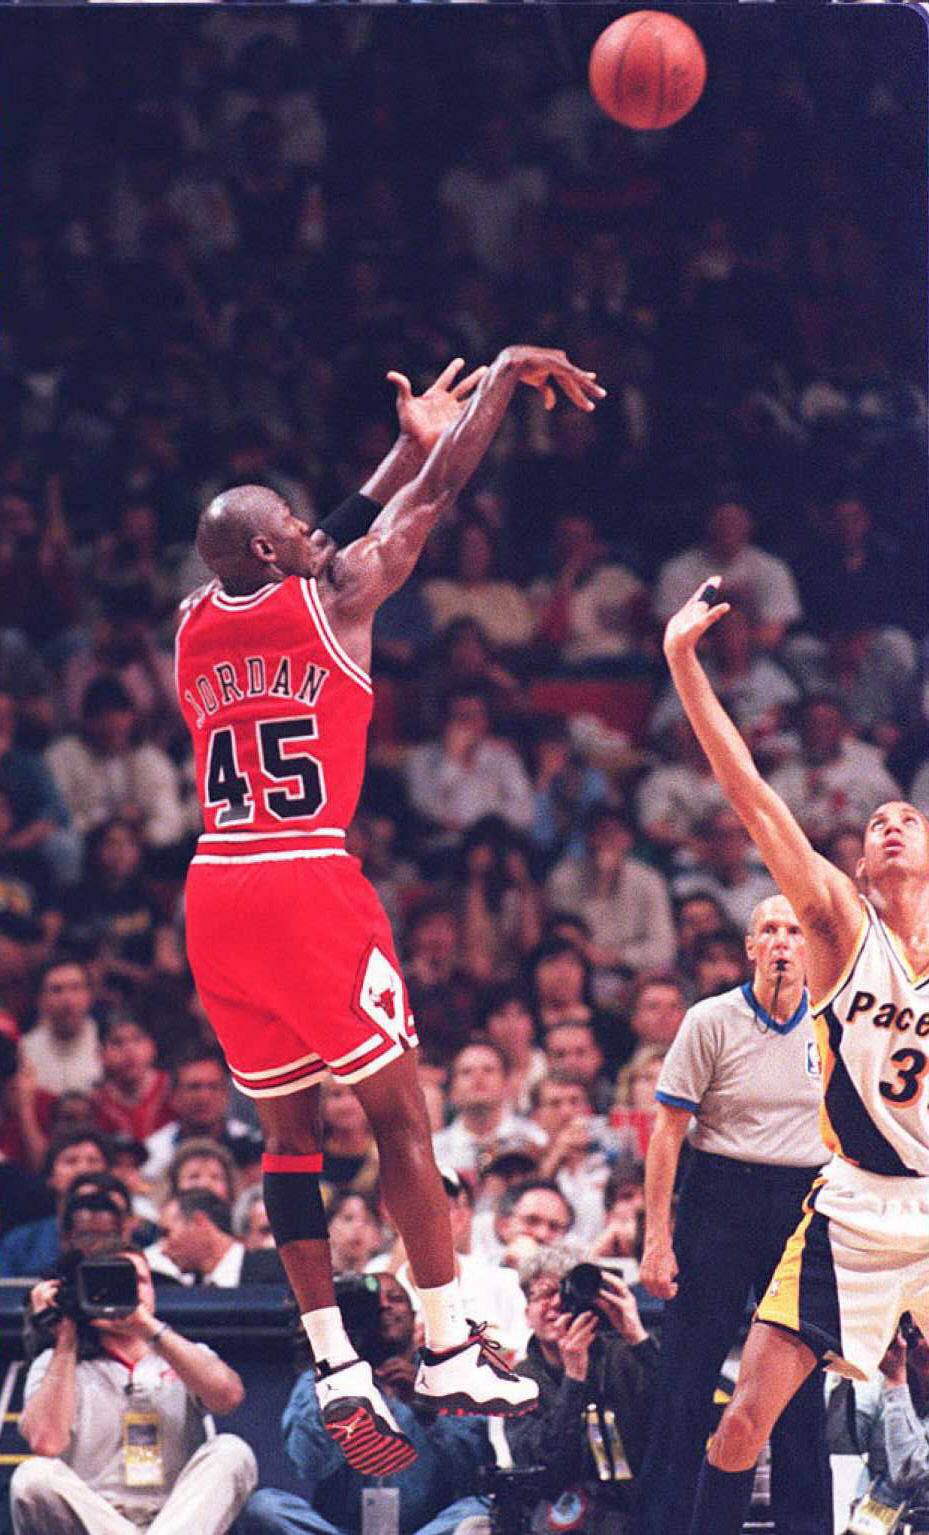 Michael Jordan struggled in his first 'return game' against the